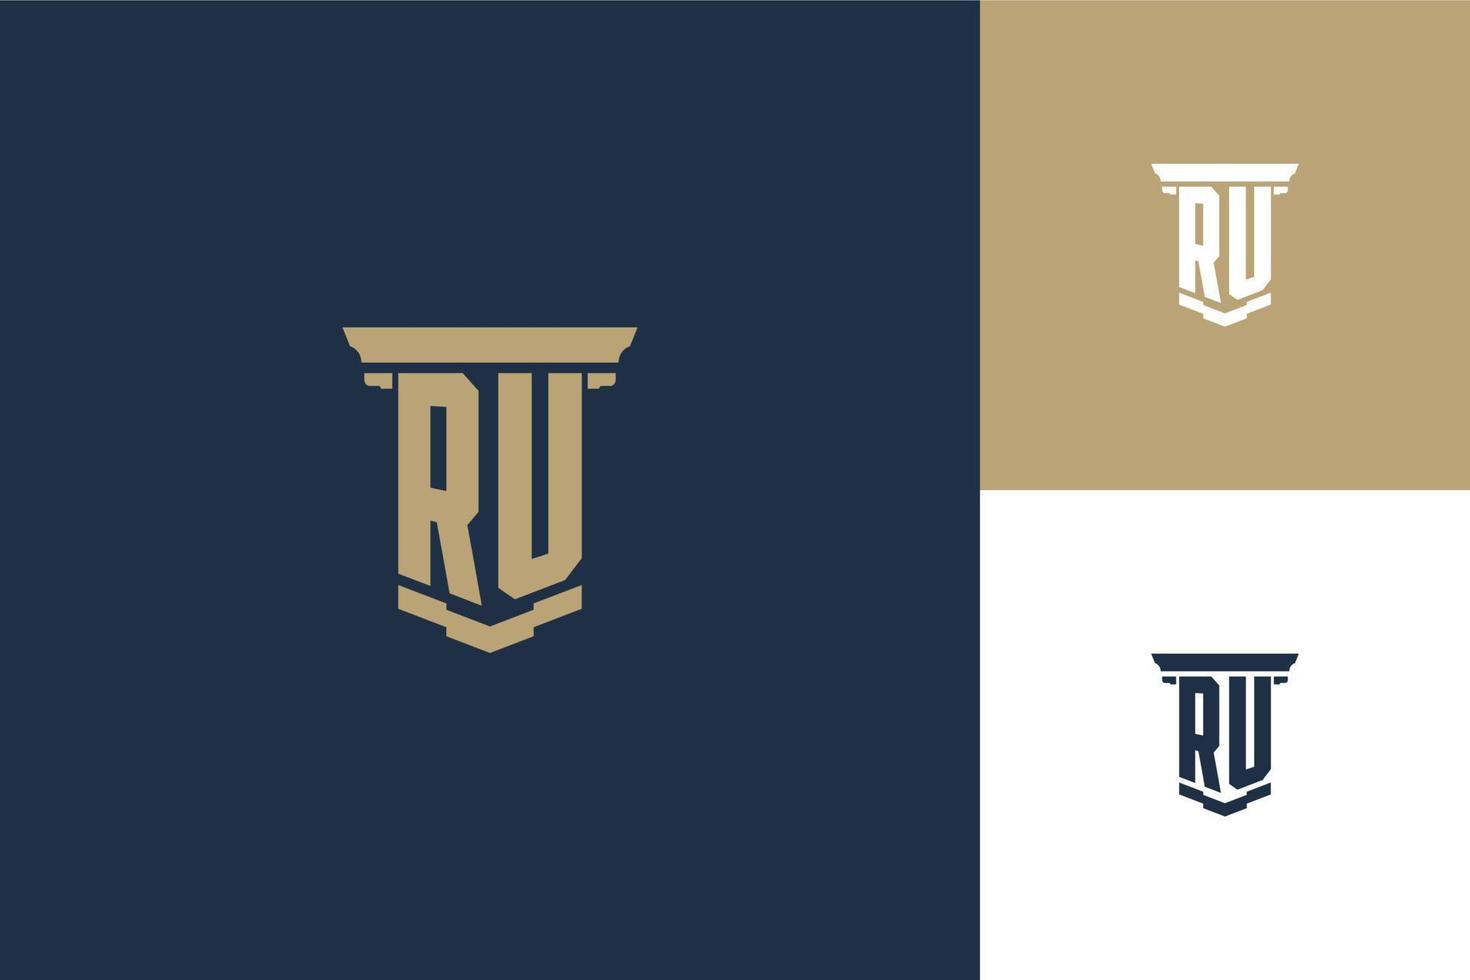 ru monogram initialer logotyp design med pelare ikon. advokatlogotypdesign vektor